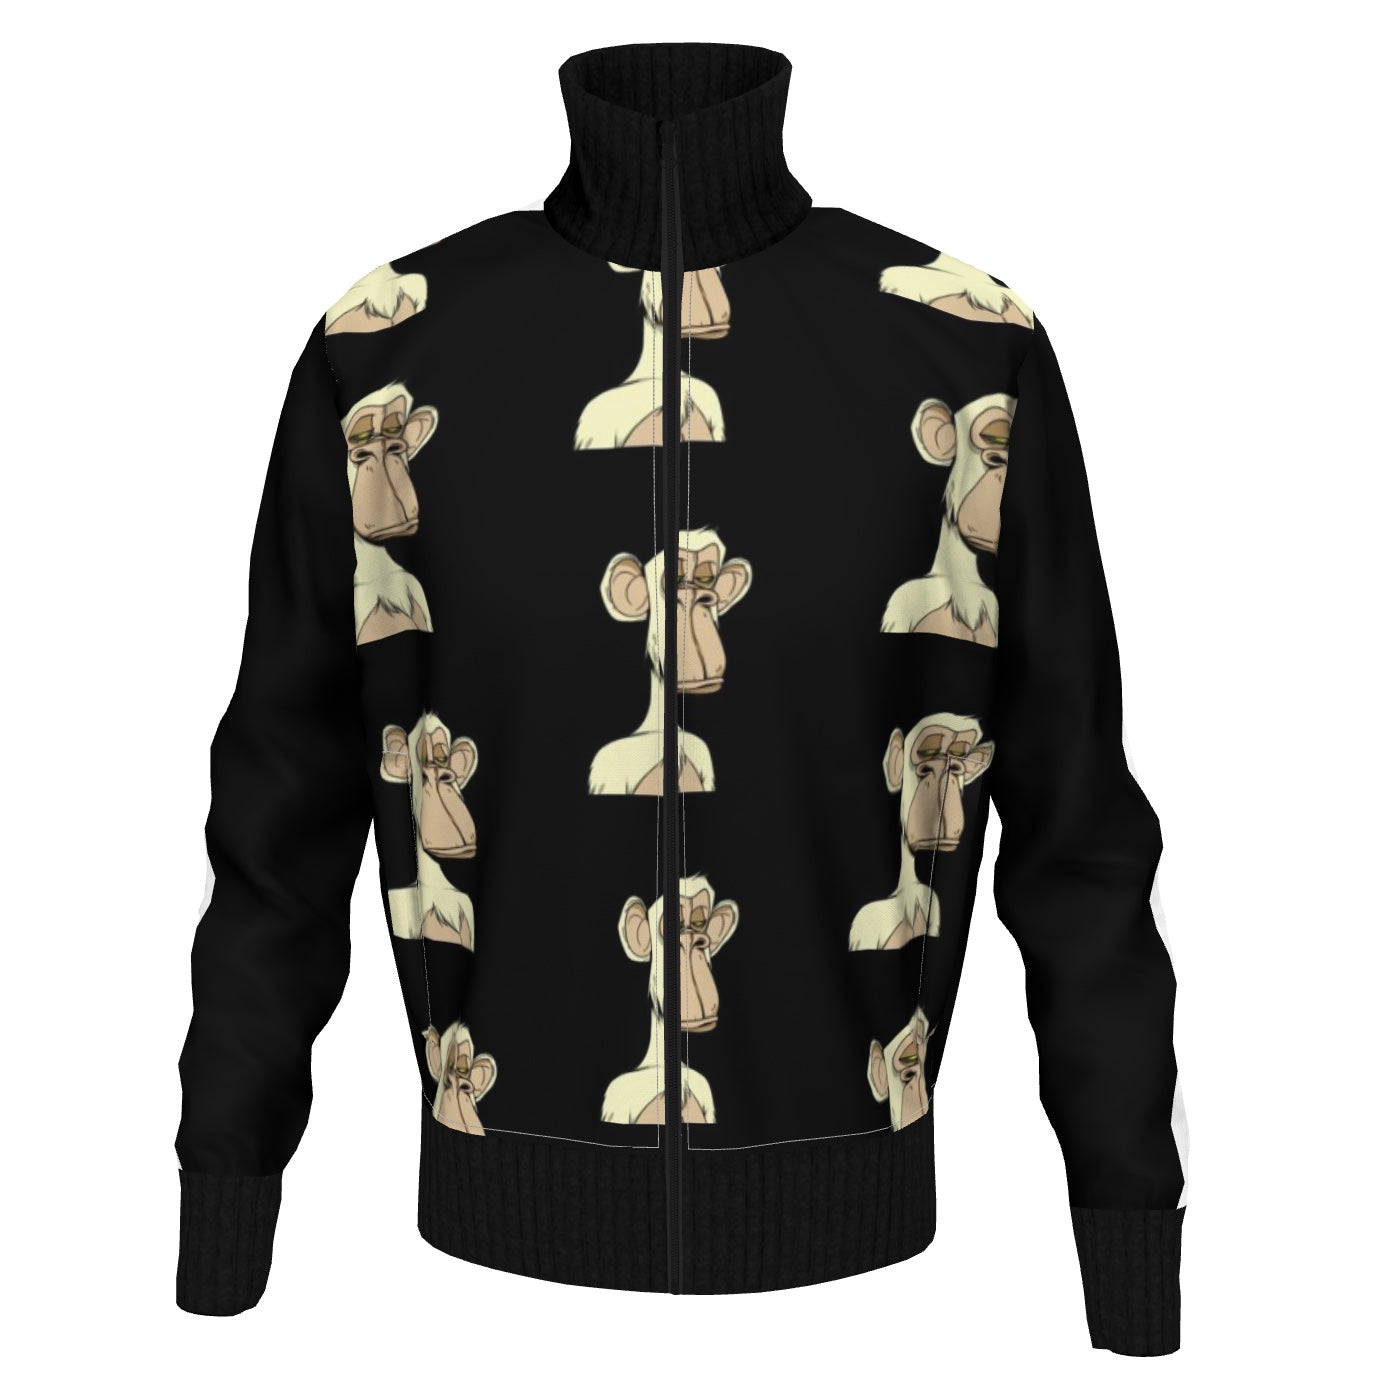 Luxury Men's Tracksuit Jacket feat BAYC #4039 🇬🇧 handmade in UK